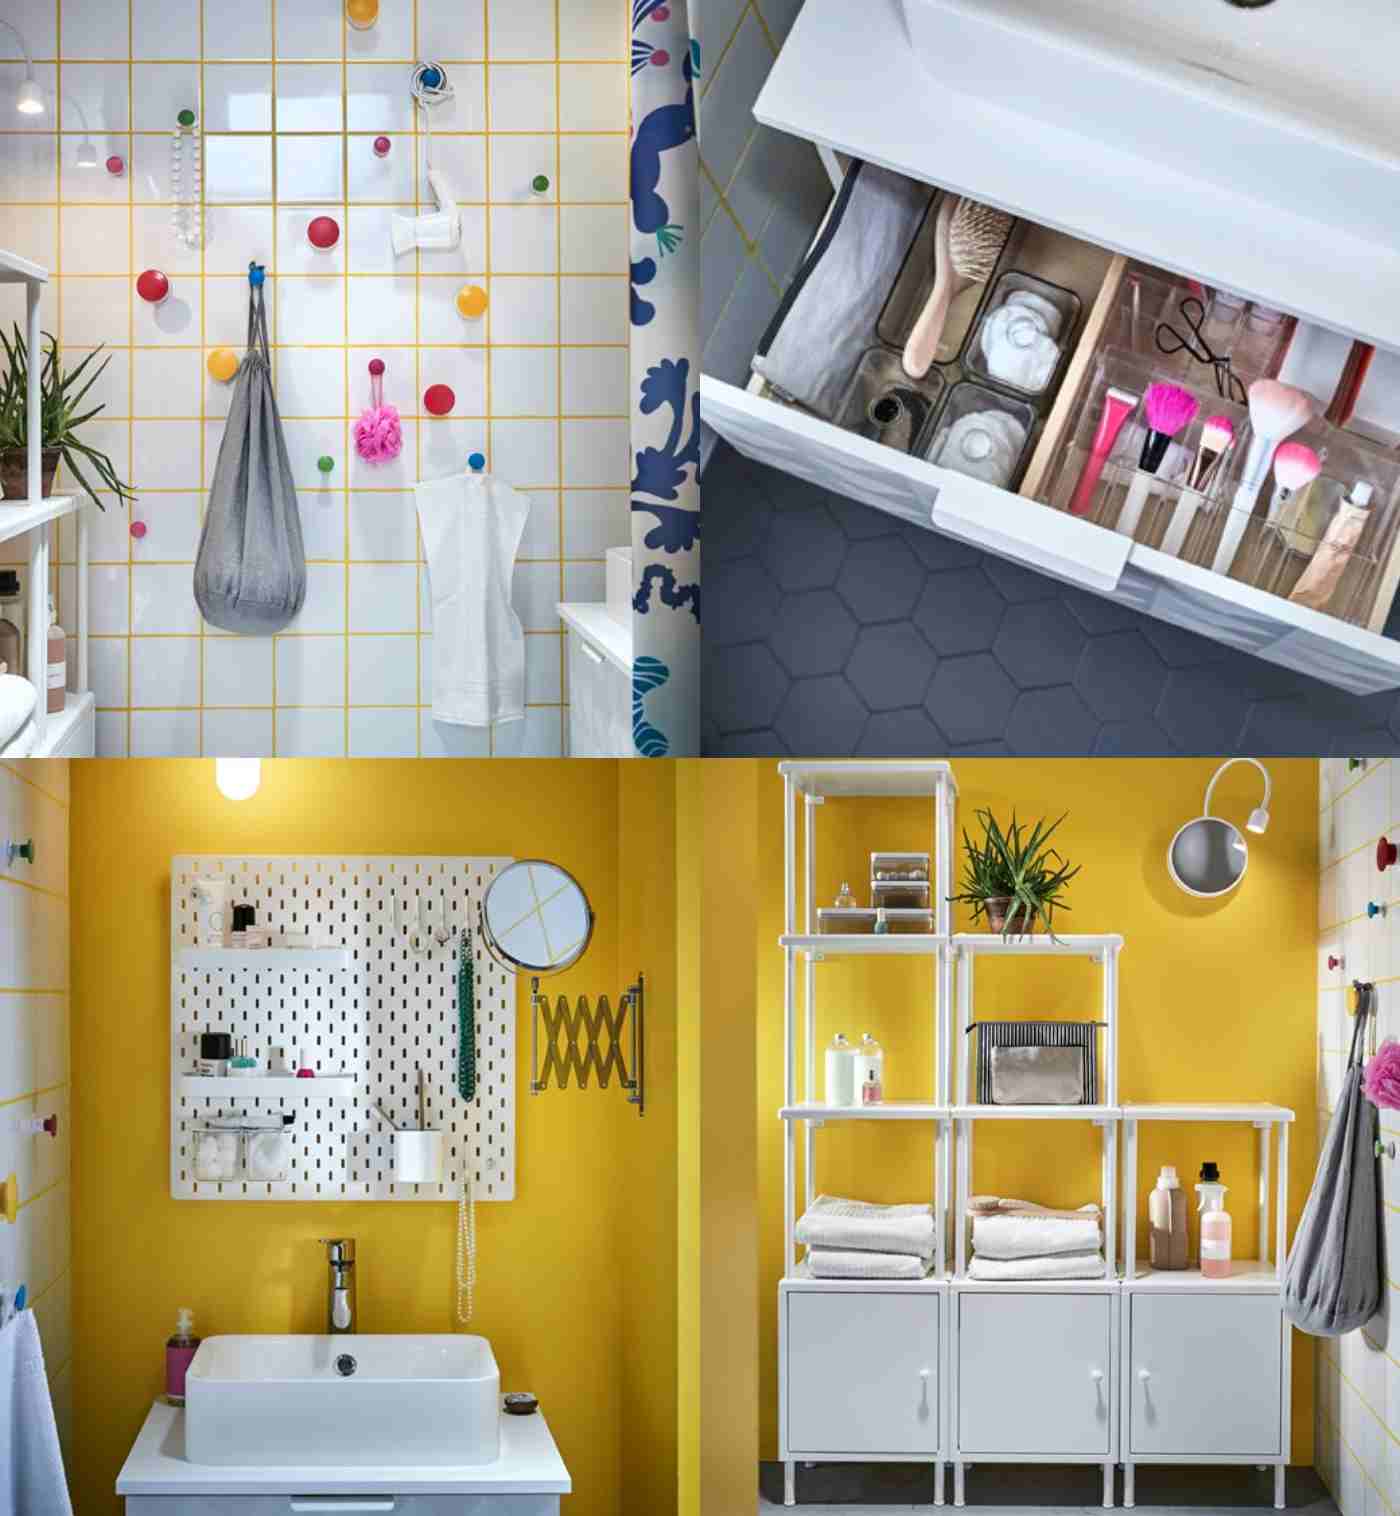 Ikea Badezimmer practically furnish ideas for ordering in bathtub tips for organization